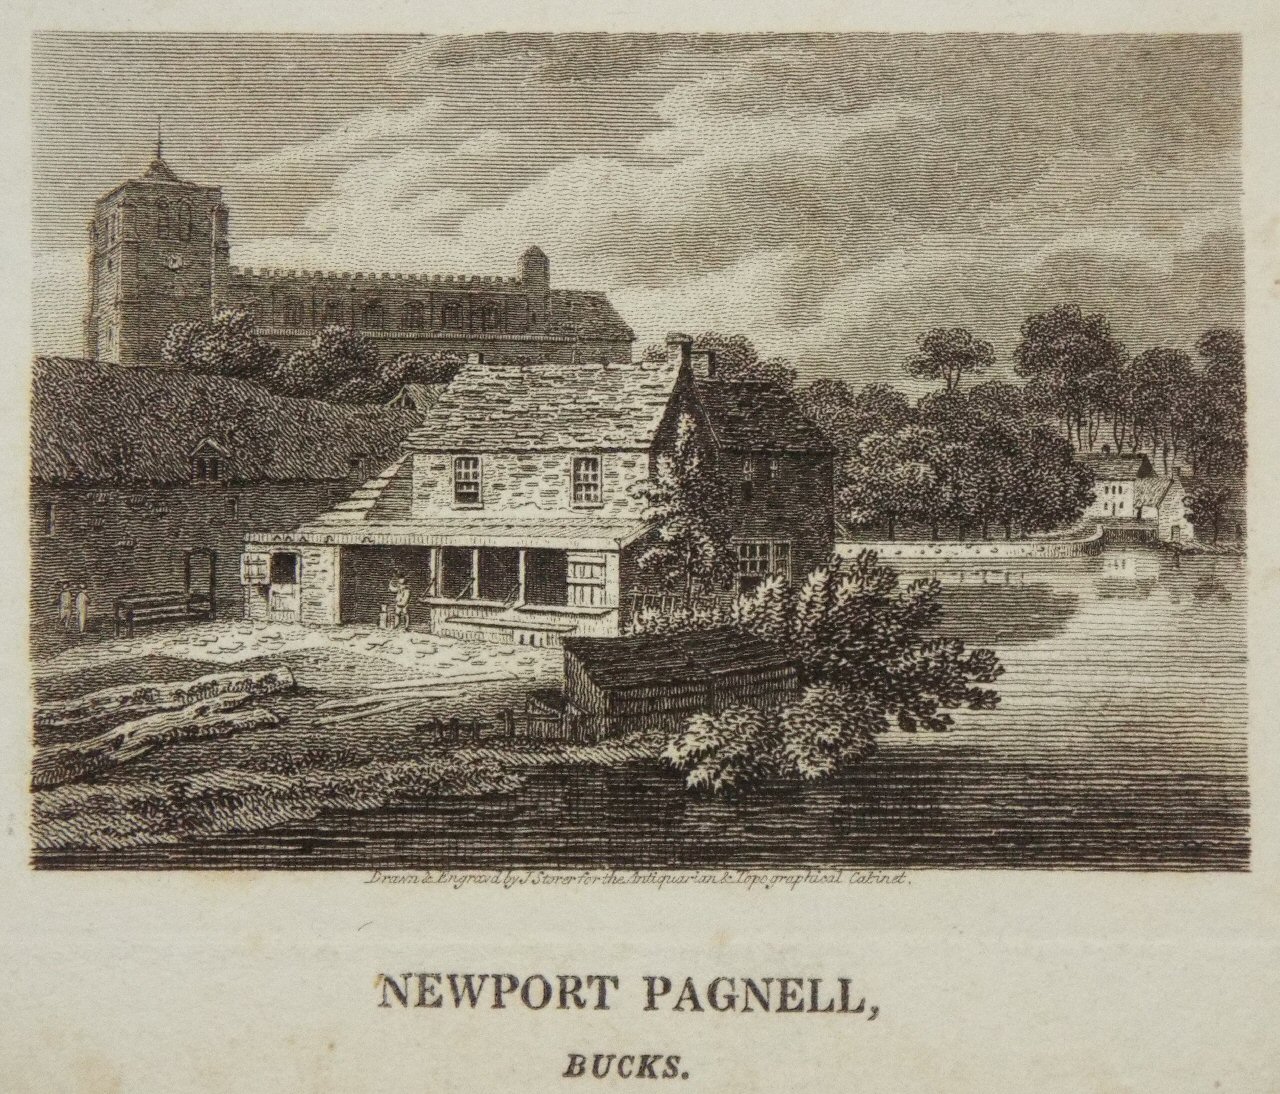 Print - Newport Pagnell, Bucks. - Storer